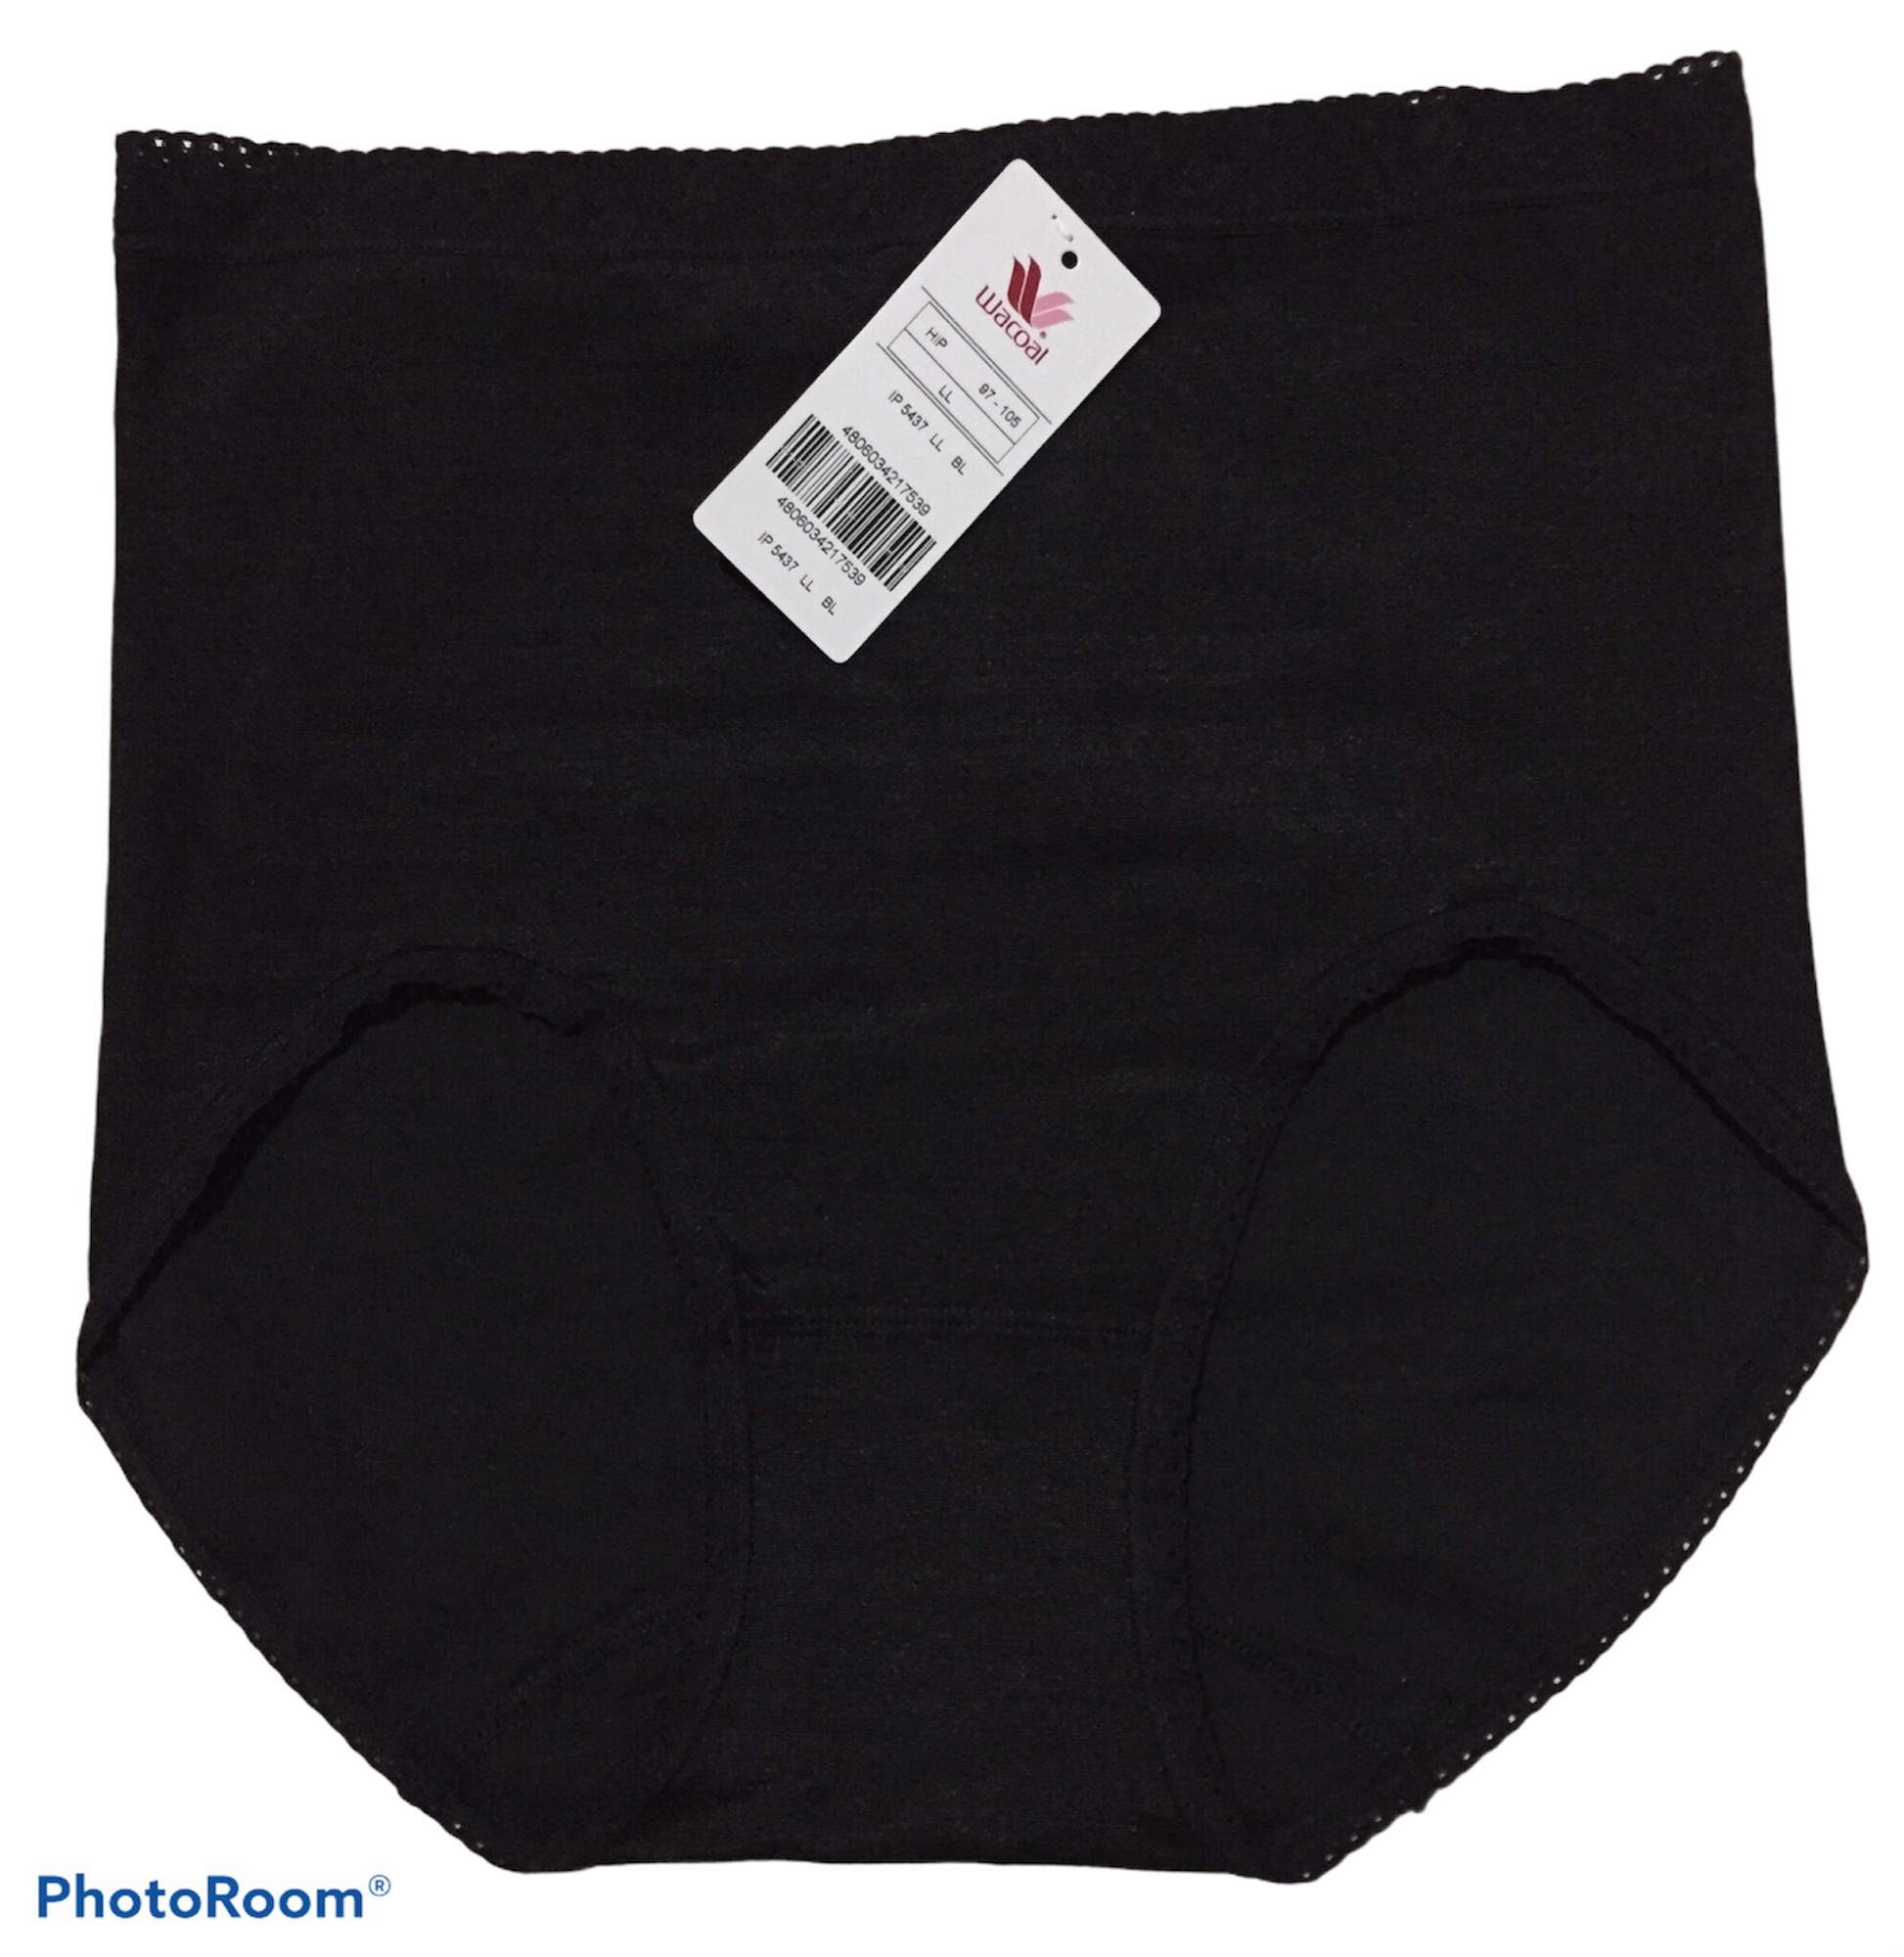 Wacoal Full Panty (Variety: Black, Brown, Light Pink) IP 5437